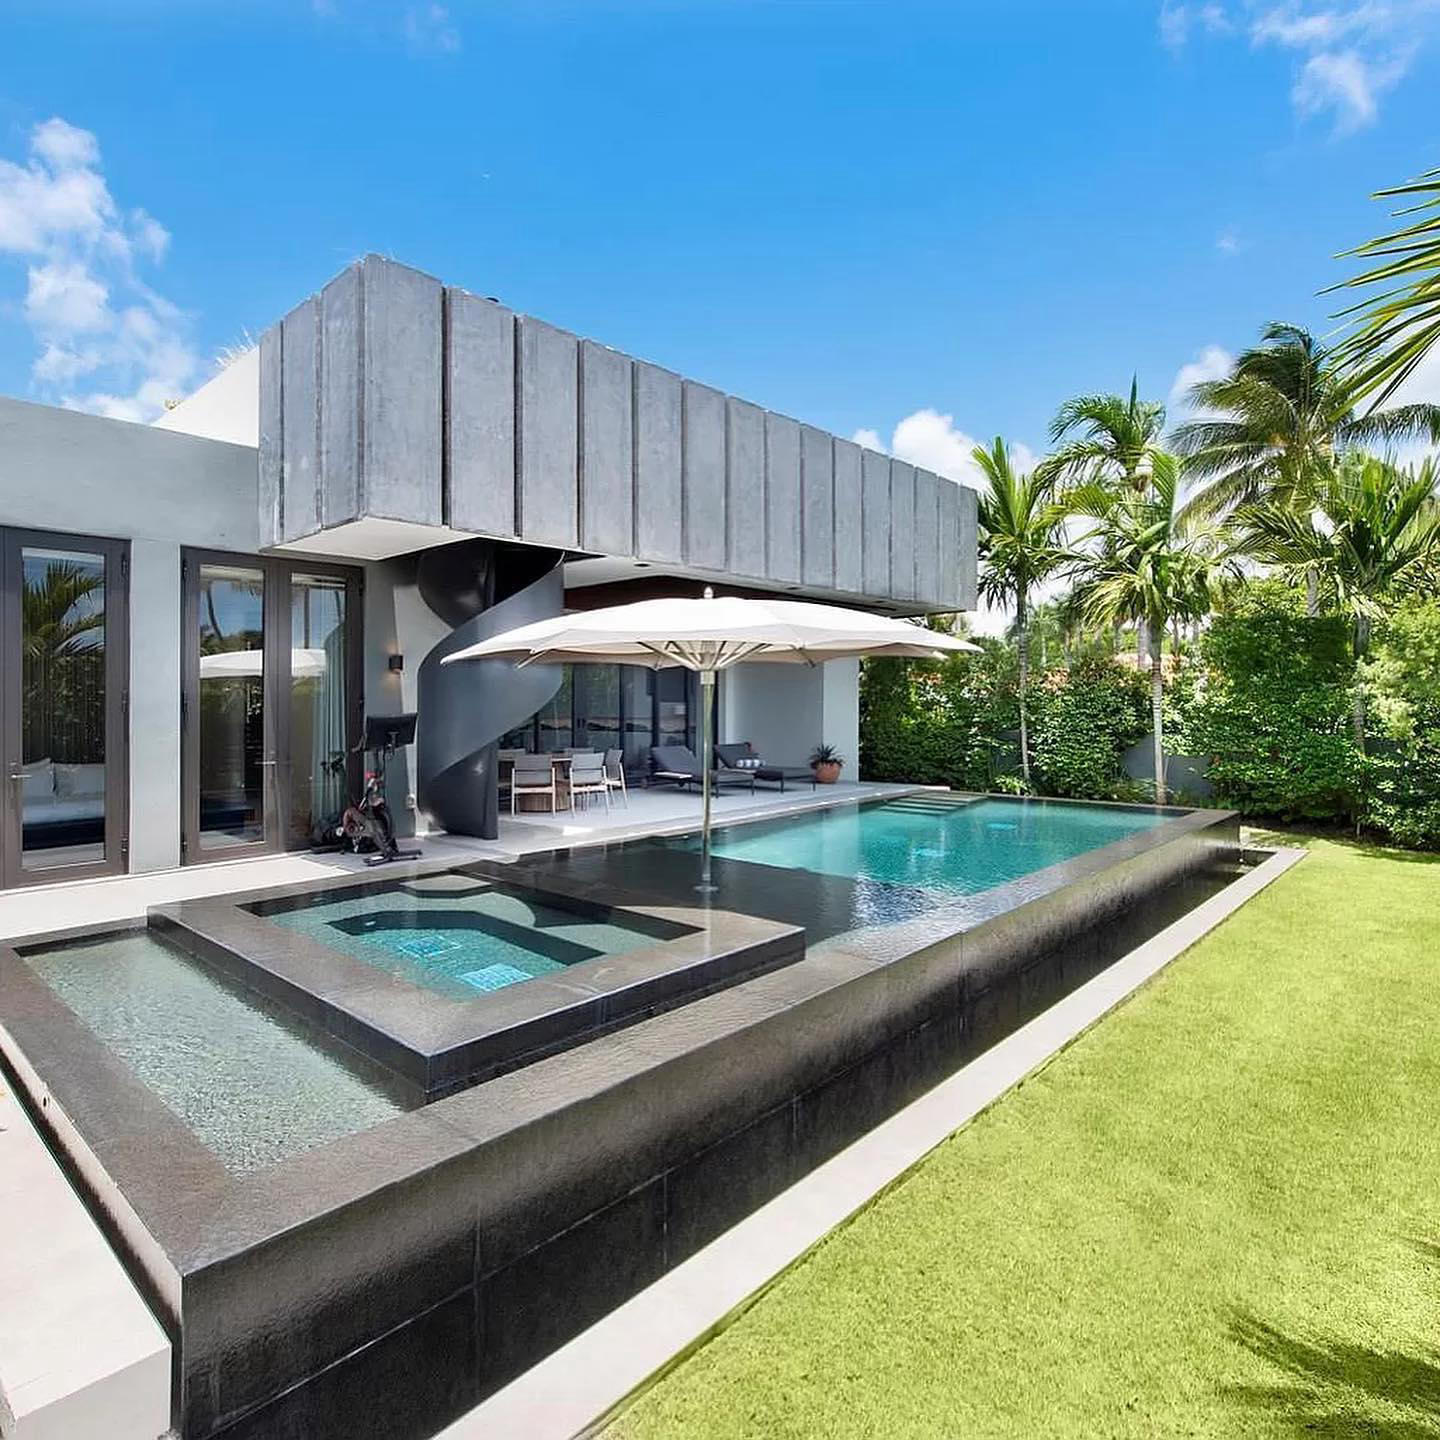 Luxury Real Estate - Today, we spotlight an exquisite waterfront villa in Miami Beach's prestigious